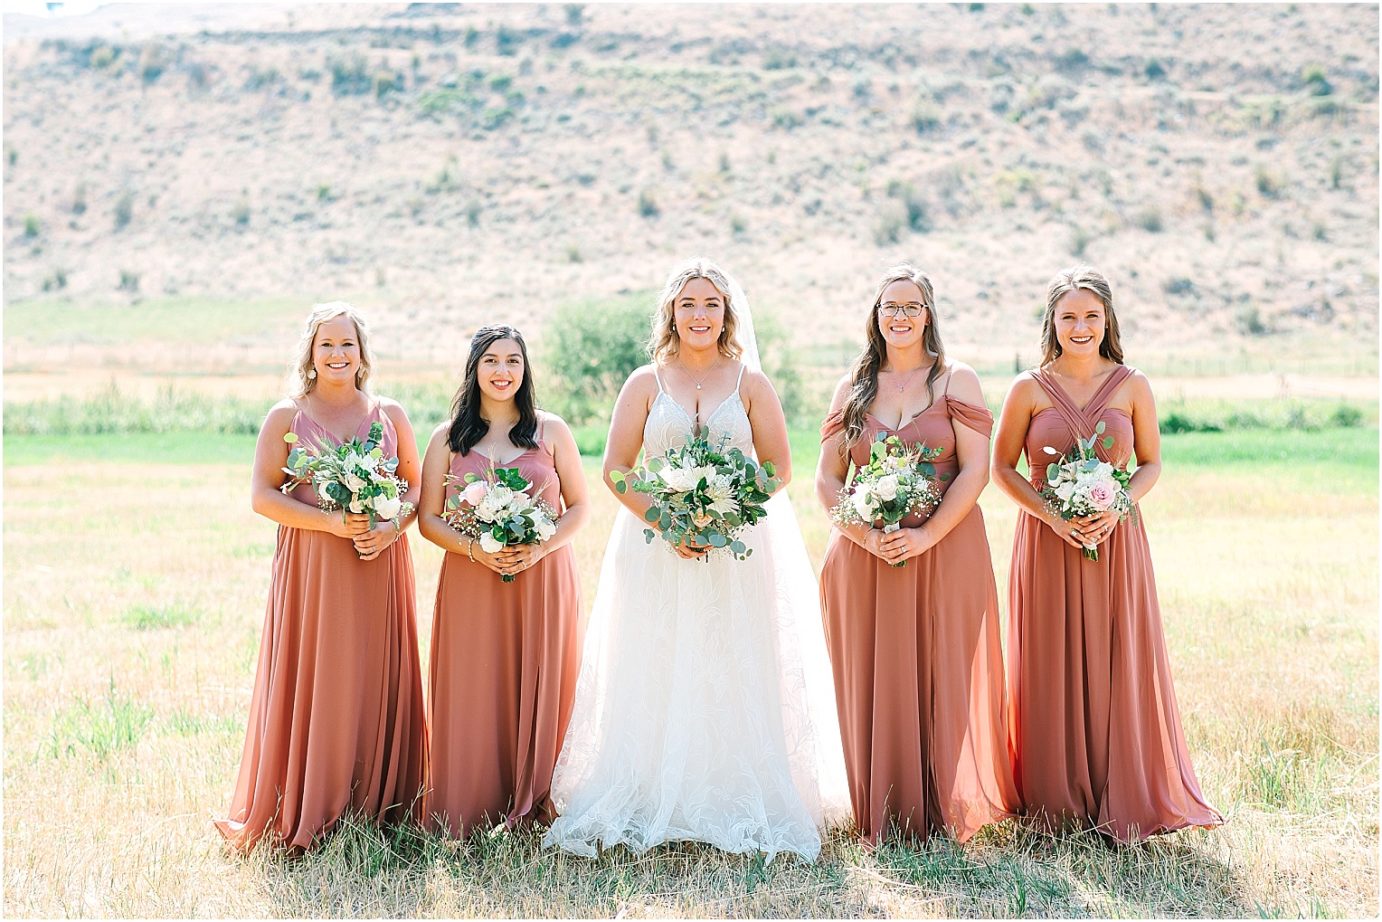 Party Barn at HJ Ranch Wedding bridesmaids in mauve dresses